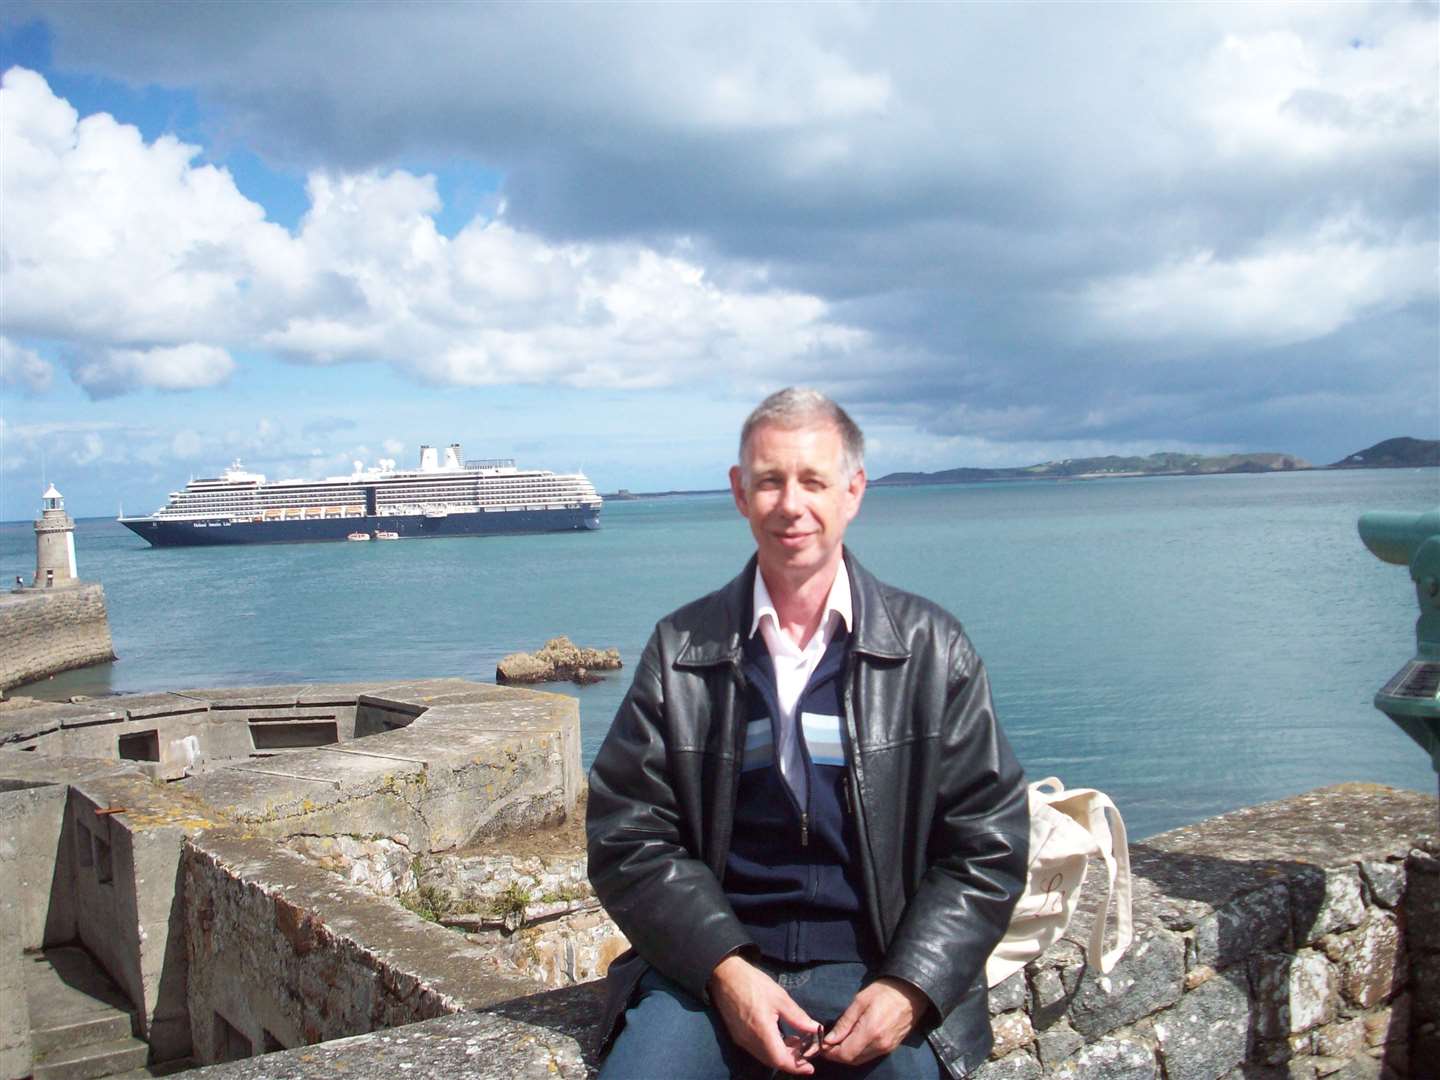 Maritime enthusiast Dave Walton